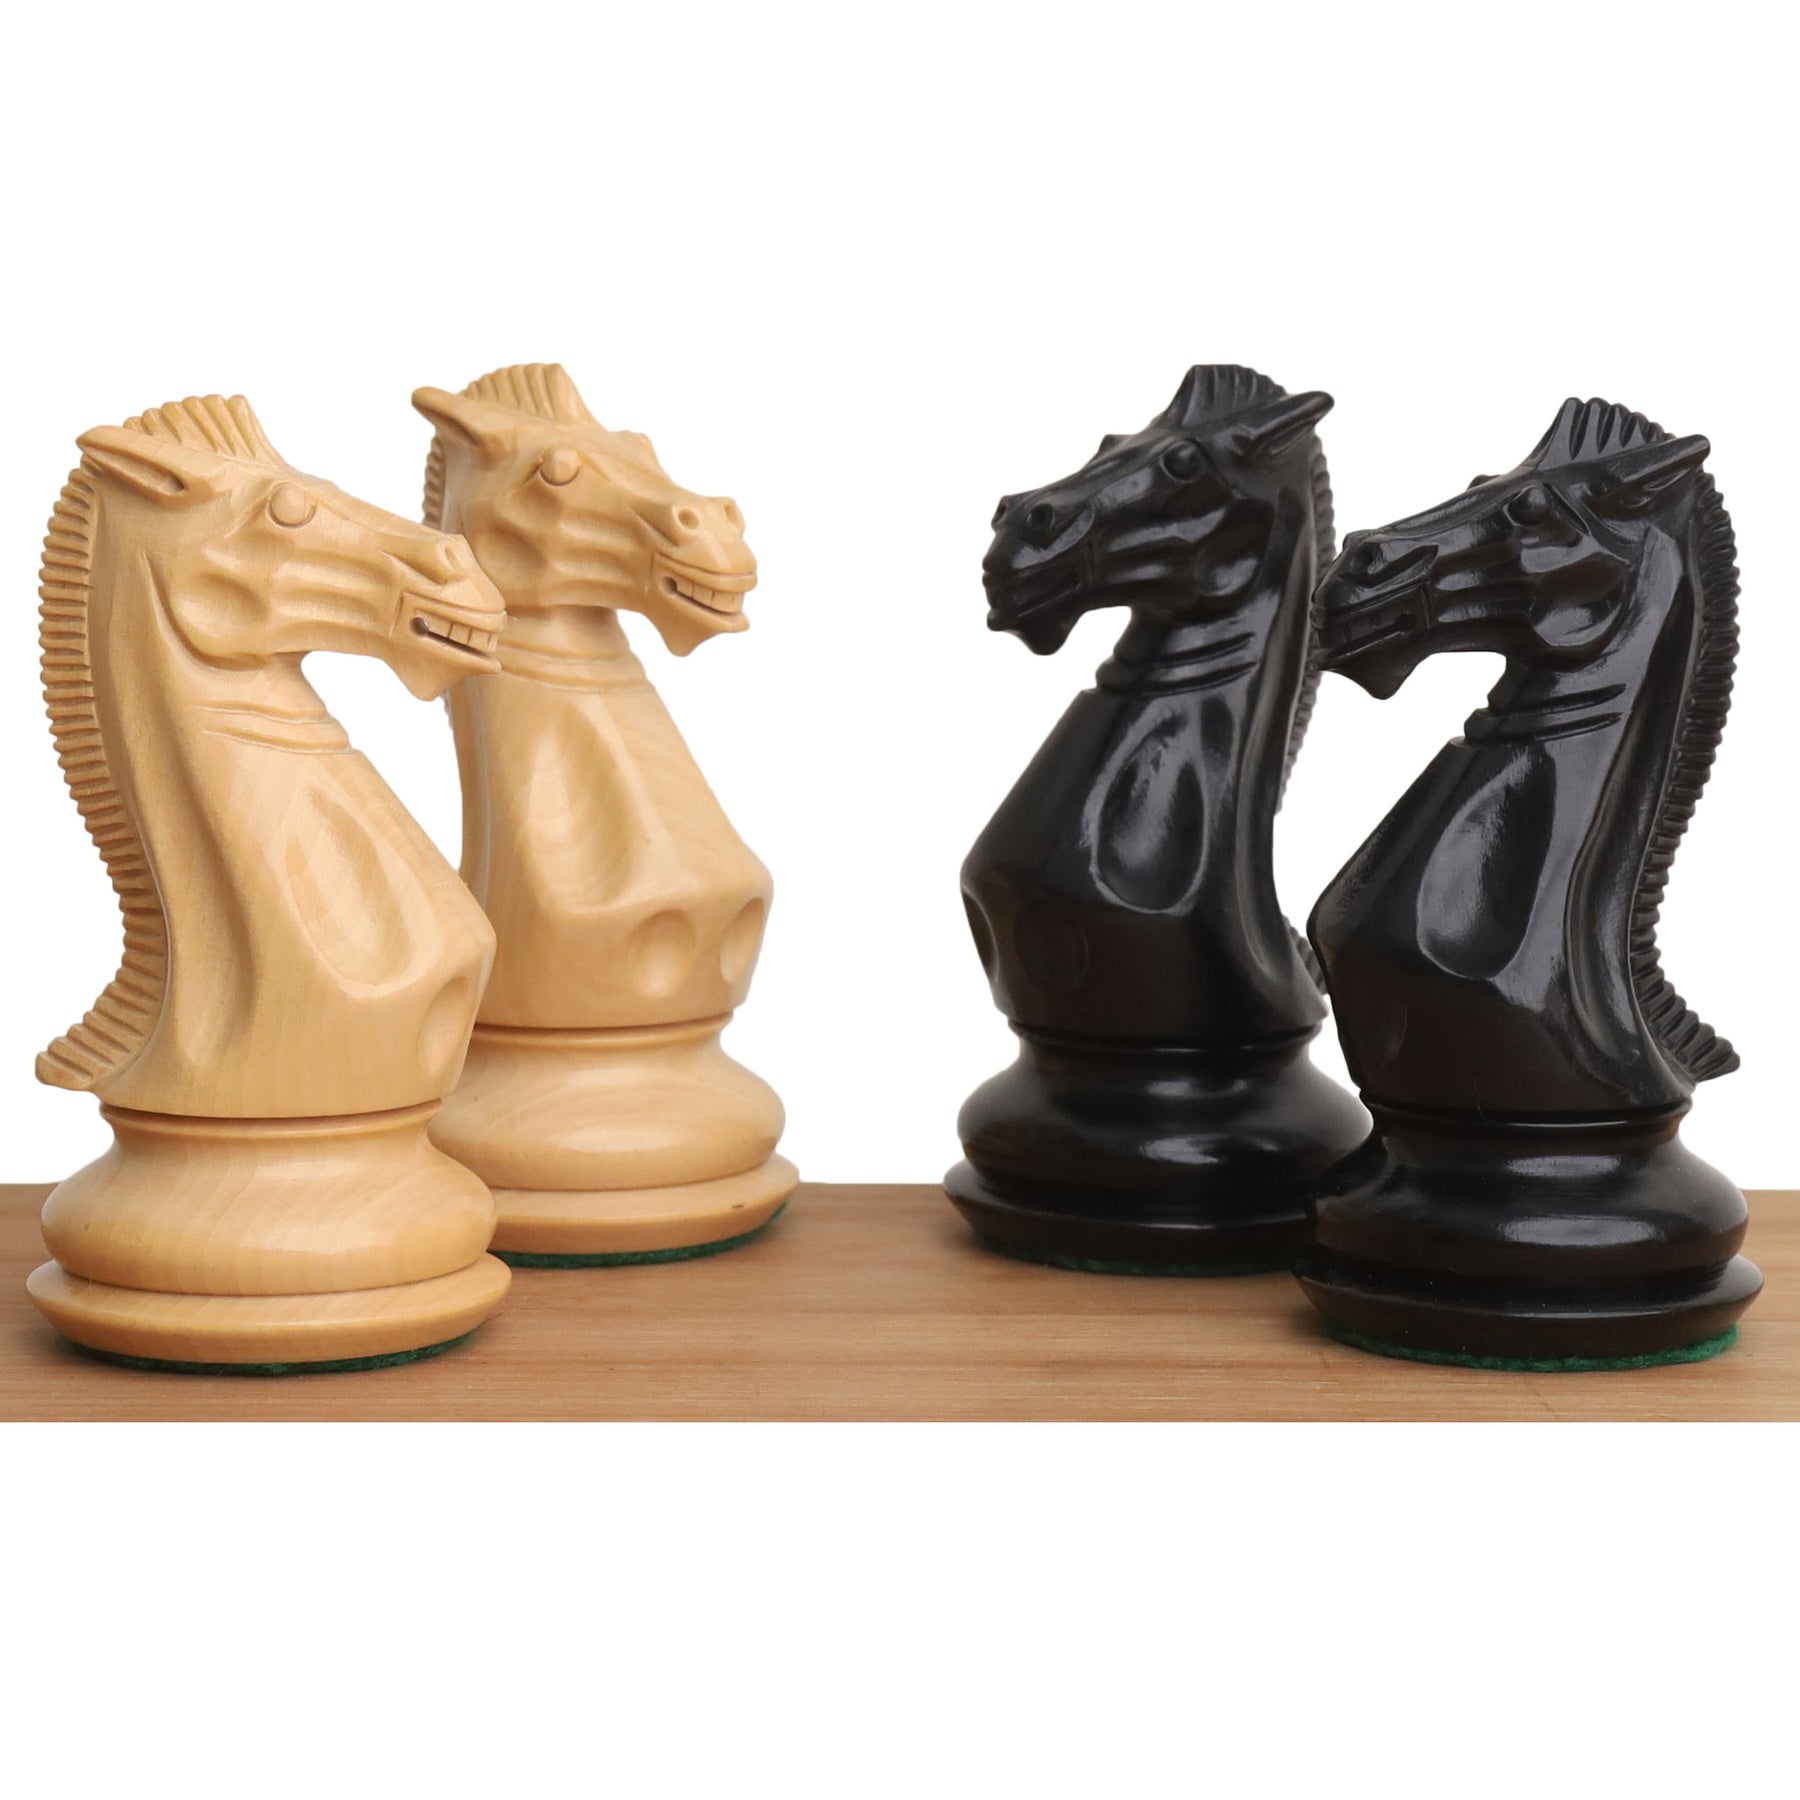 4.1″ Traveller Staunton Luxury Chess Pieces Only set – Triple